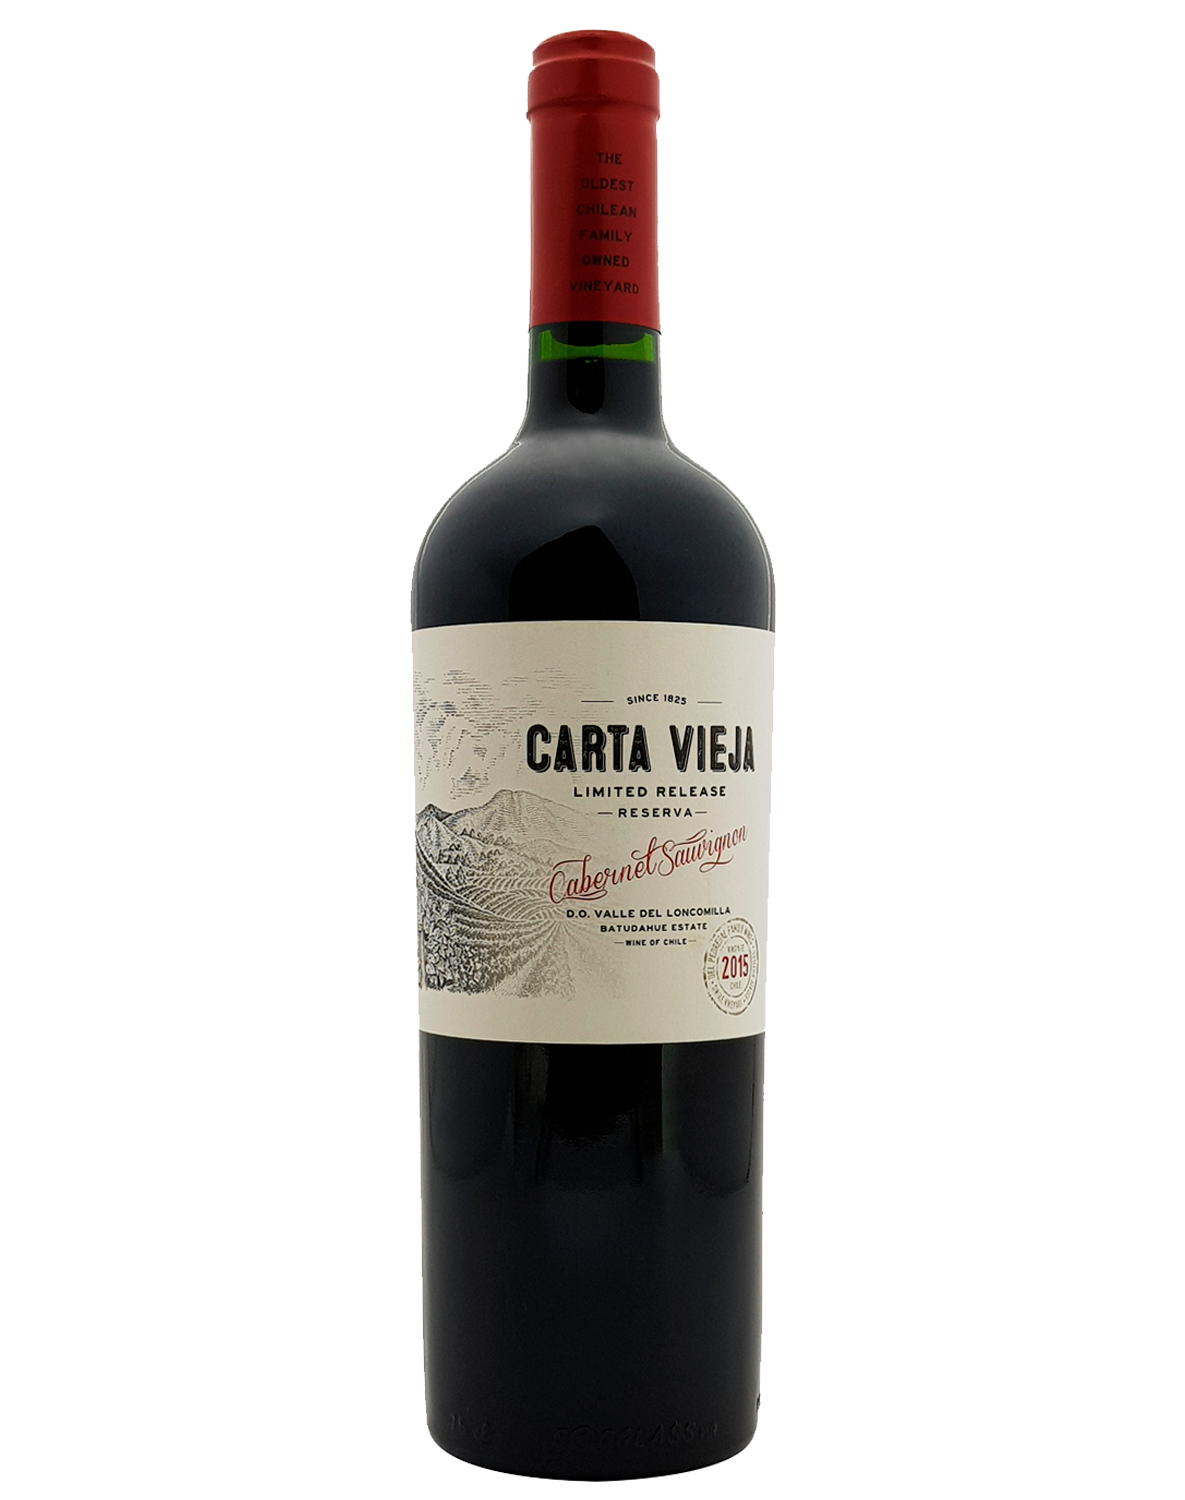 Vinho Tinto Carta Vieja Limited Release Reserva Cabernet Sauvignon D.O. Vale do Loncomilla Batudahue Estate 2015